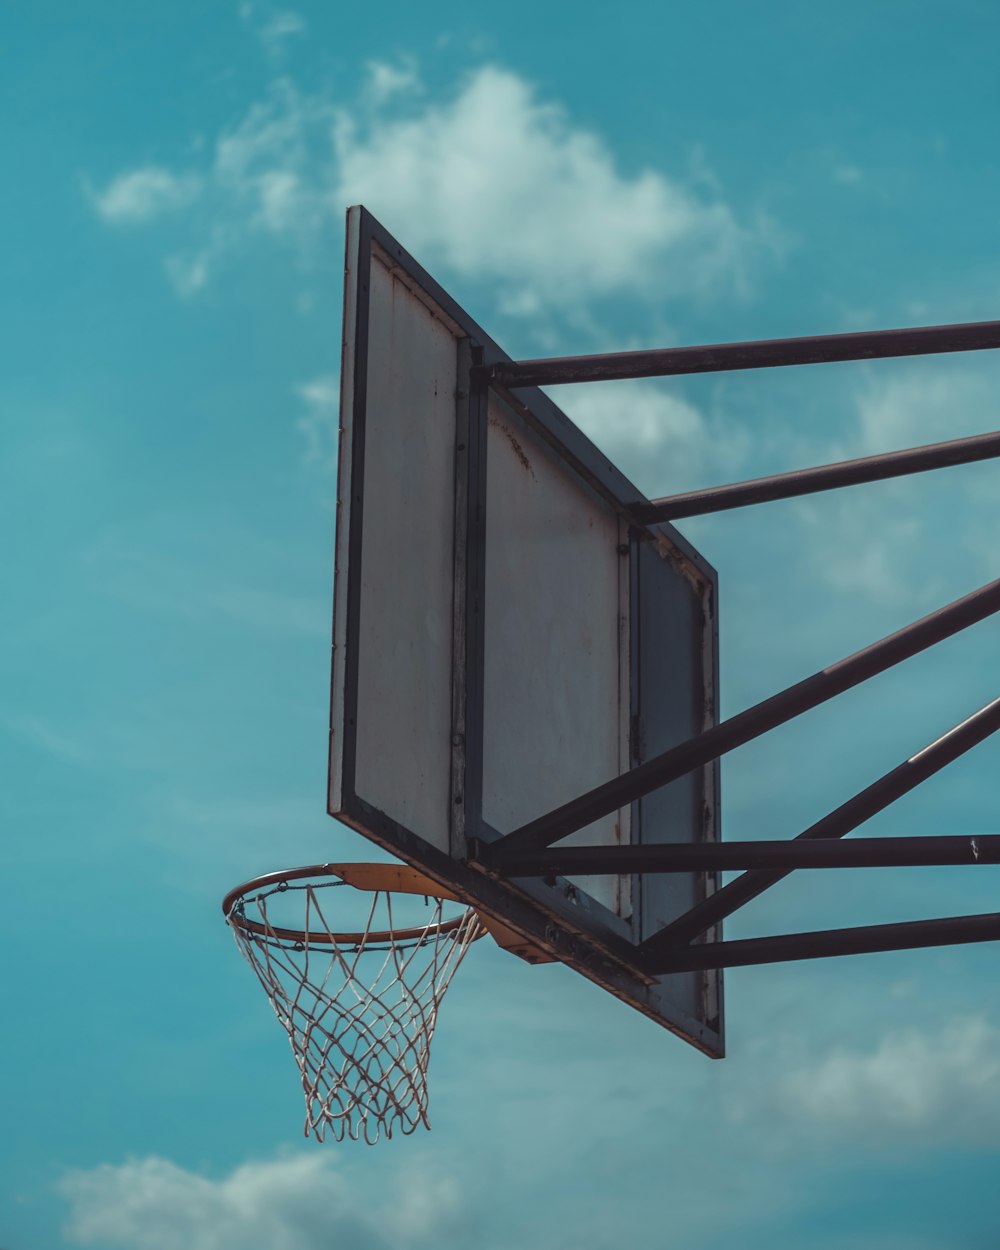 black and white basketball hoop under blue sky